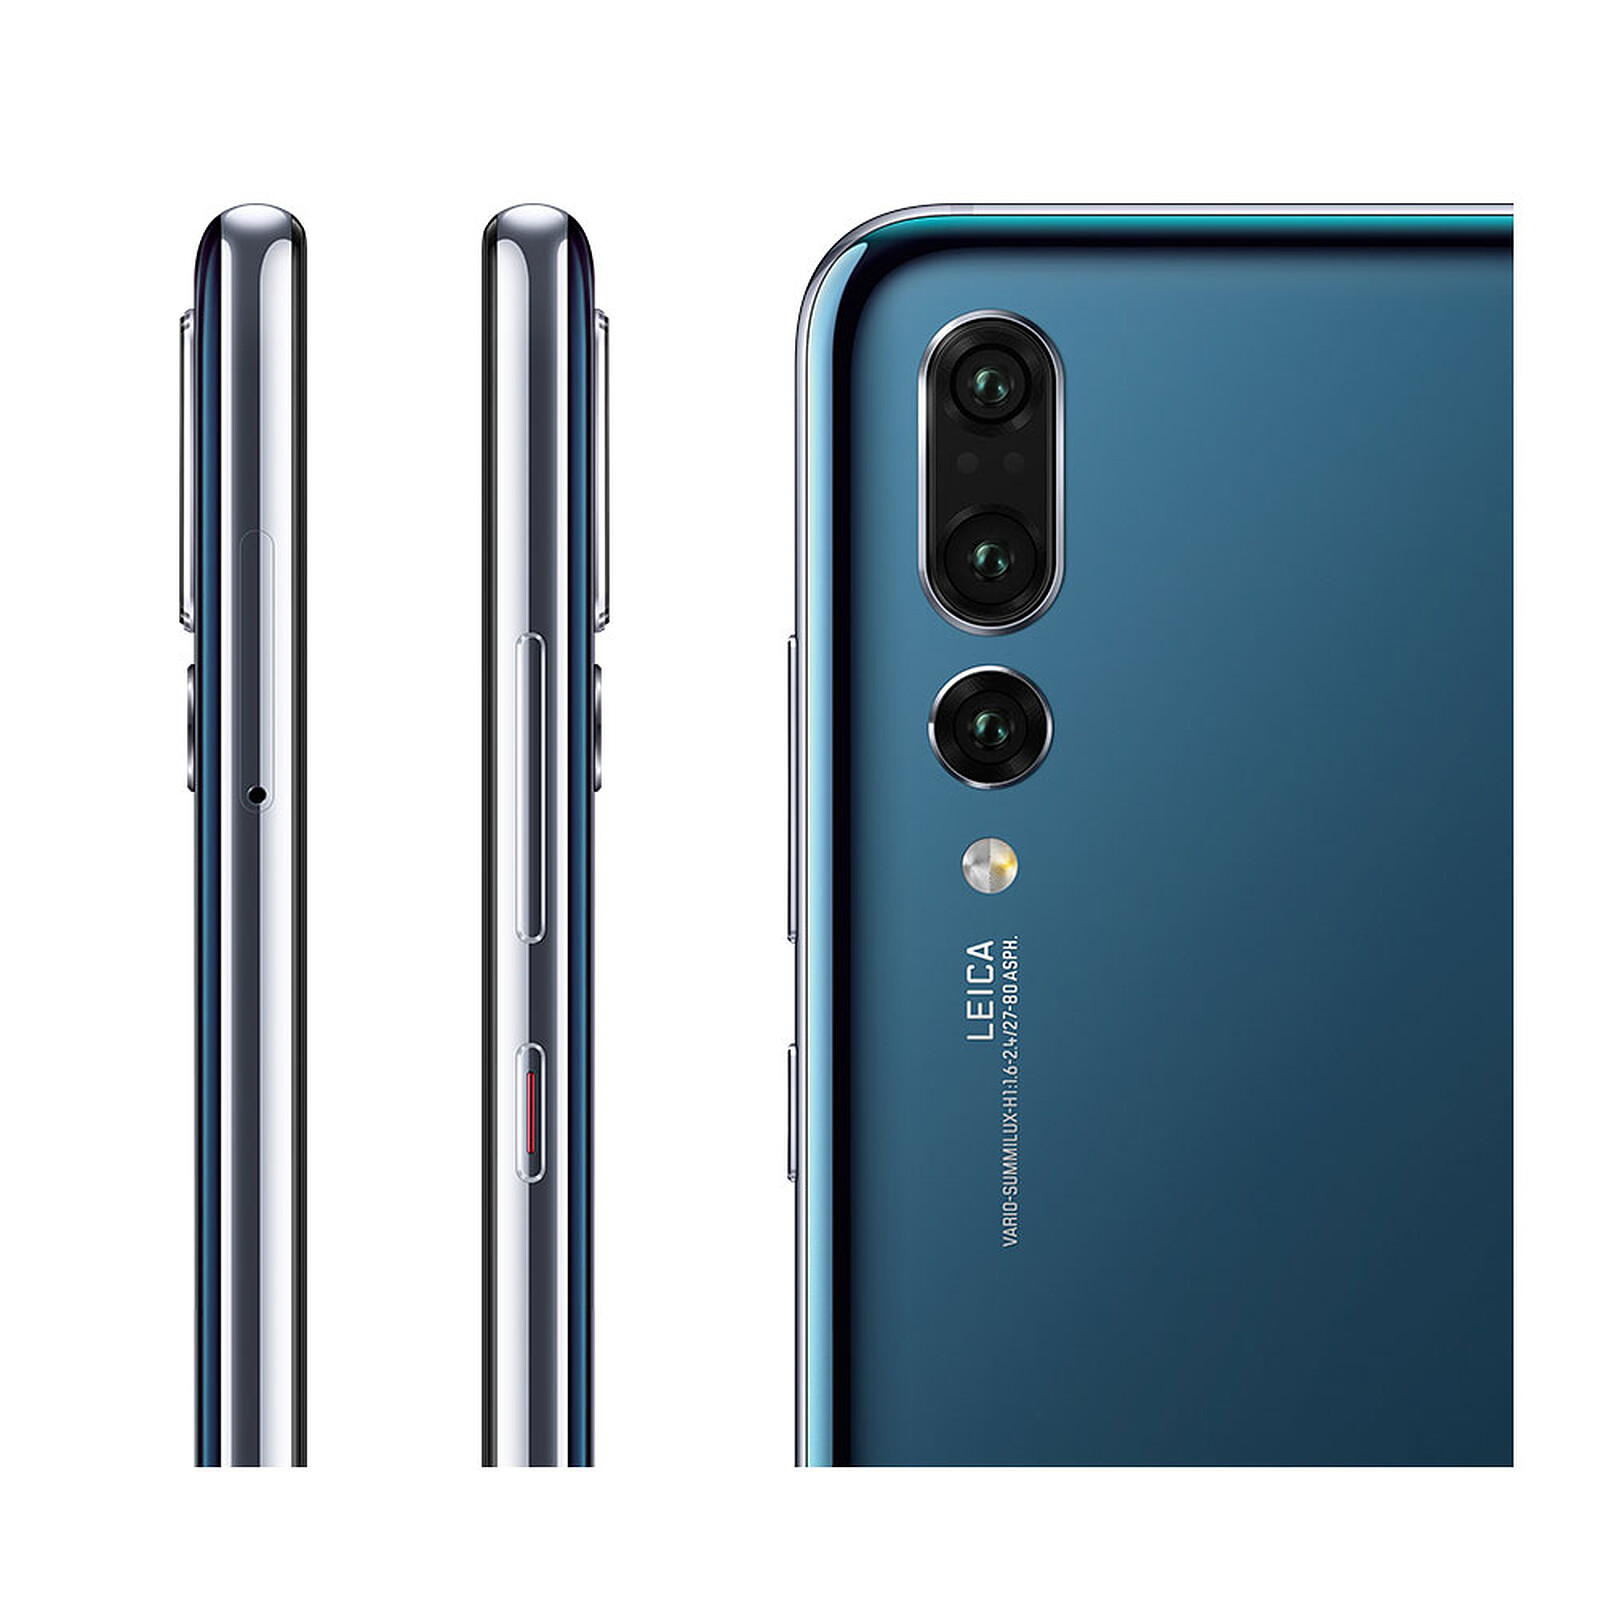 Huawei P20 Pro Azul - Móvil y smartphone - LDLC